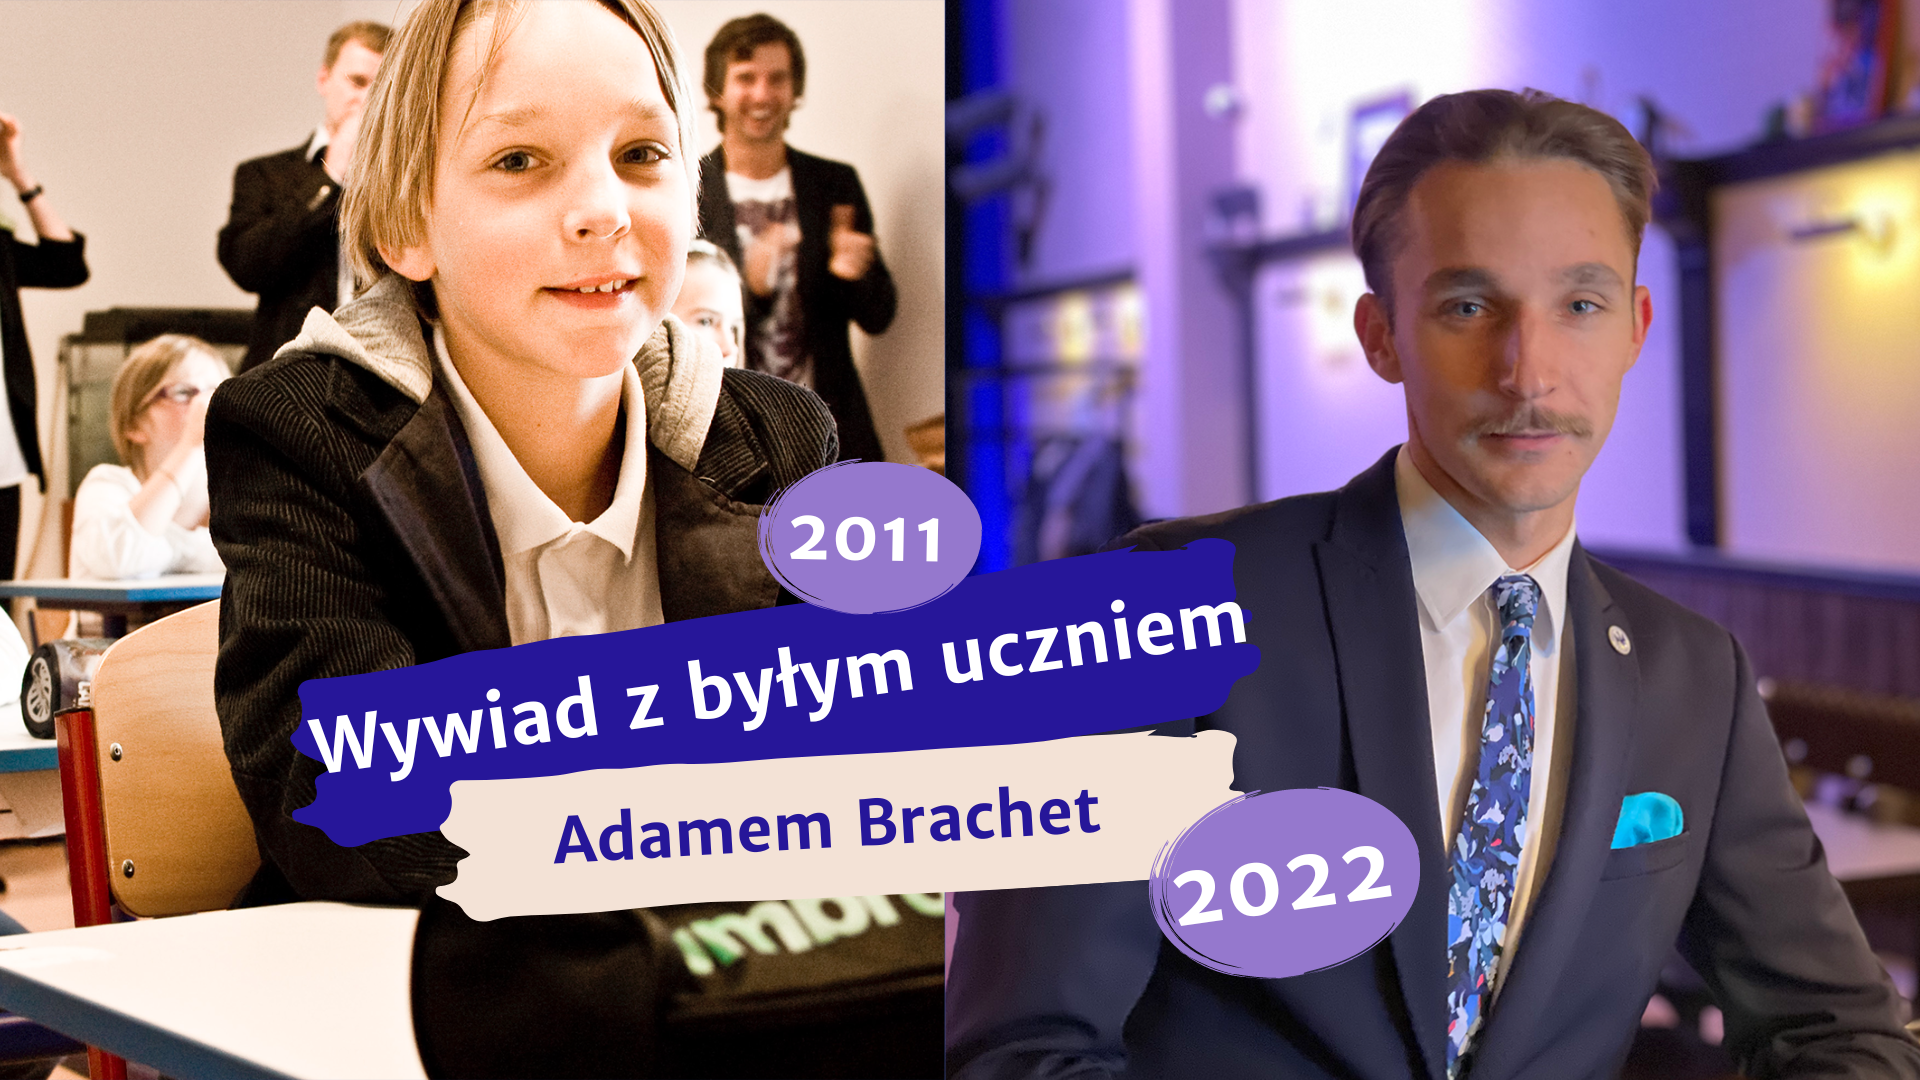 Adam Brachet